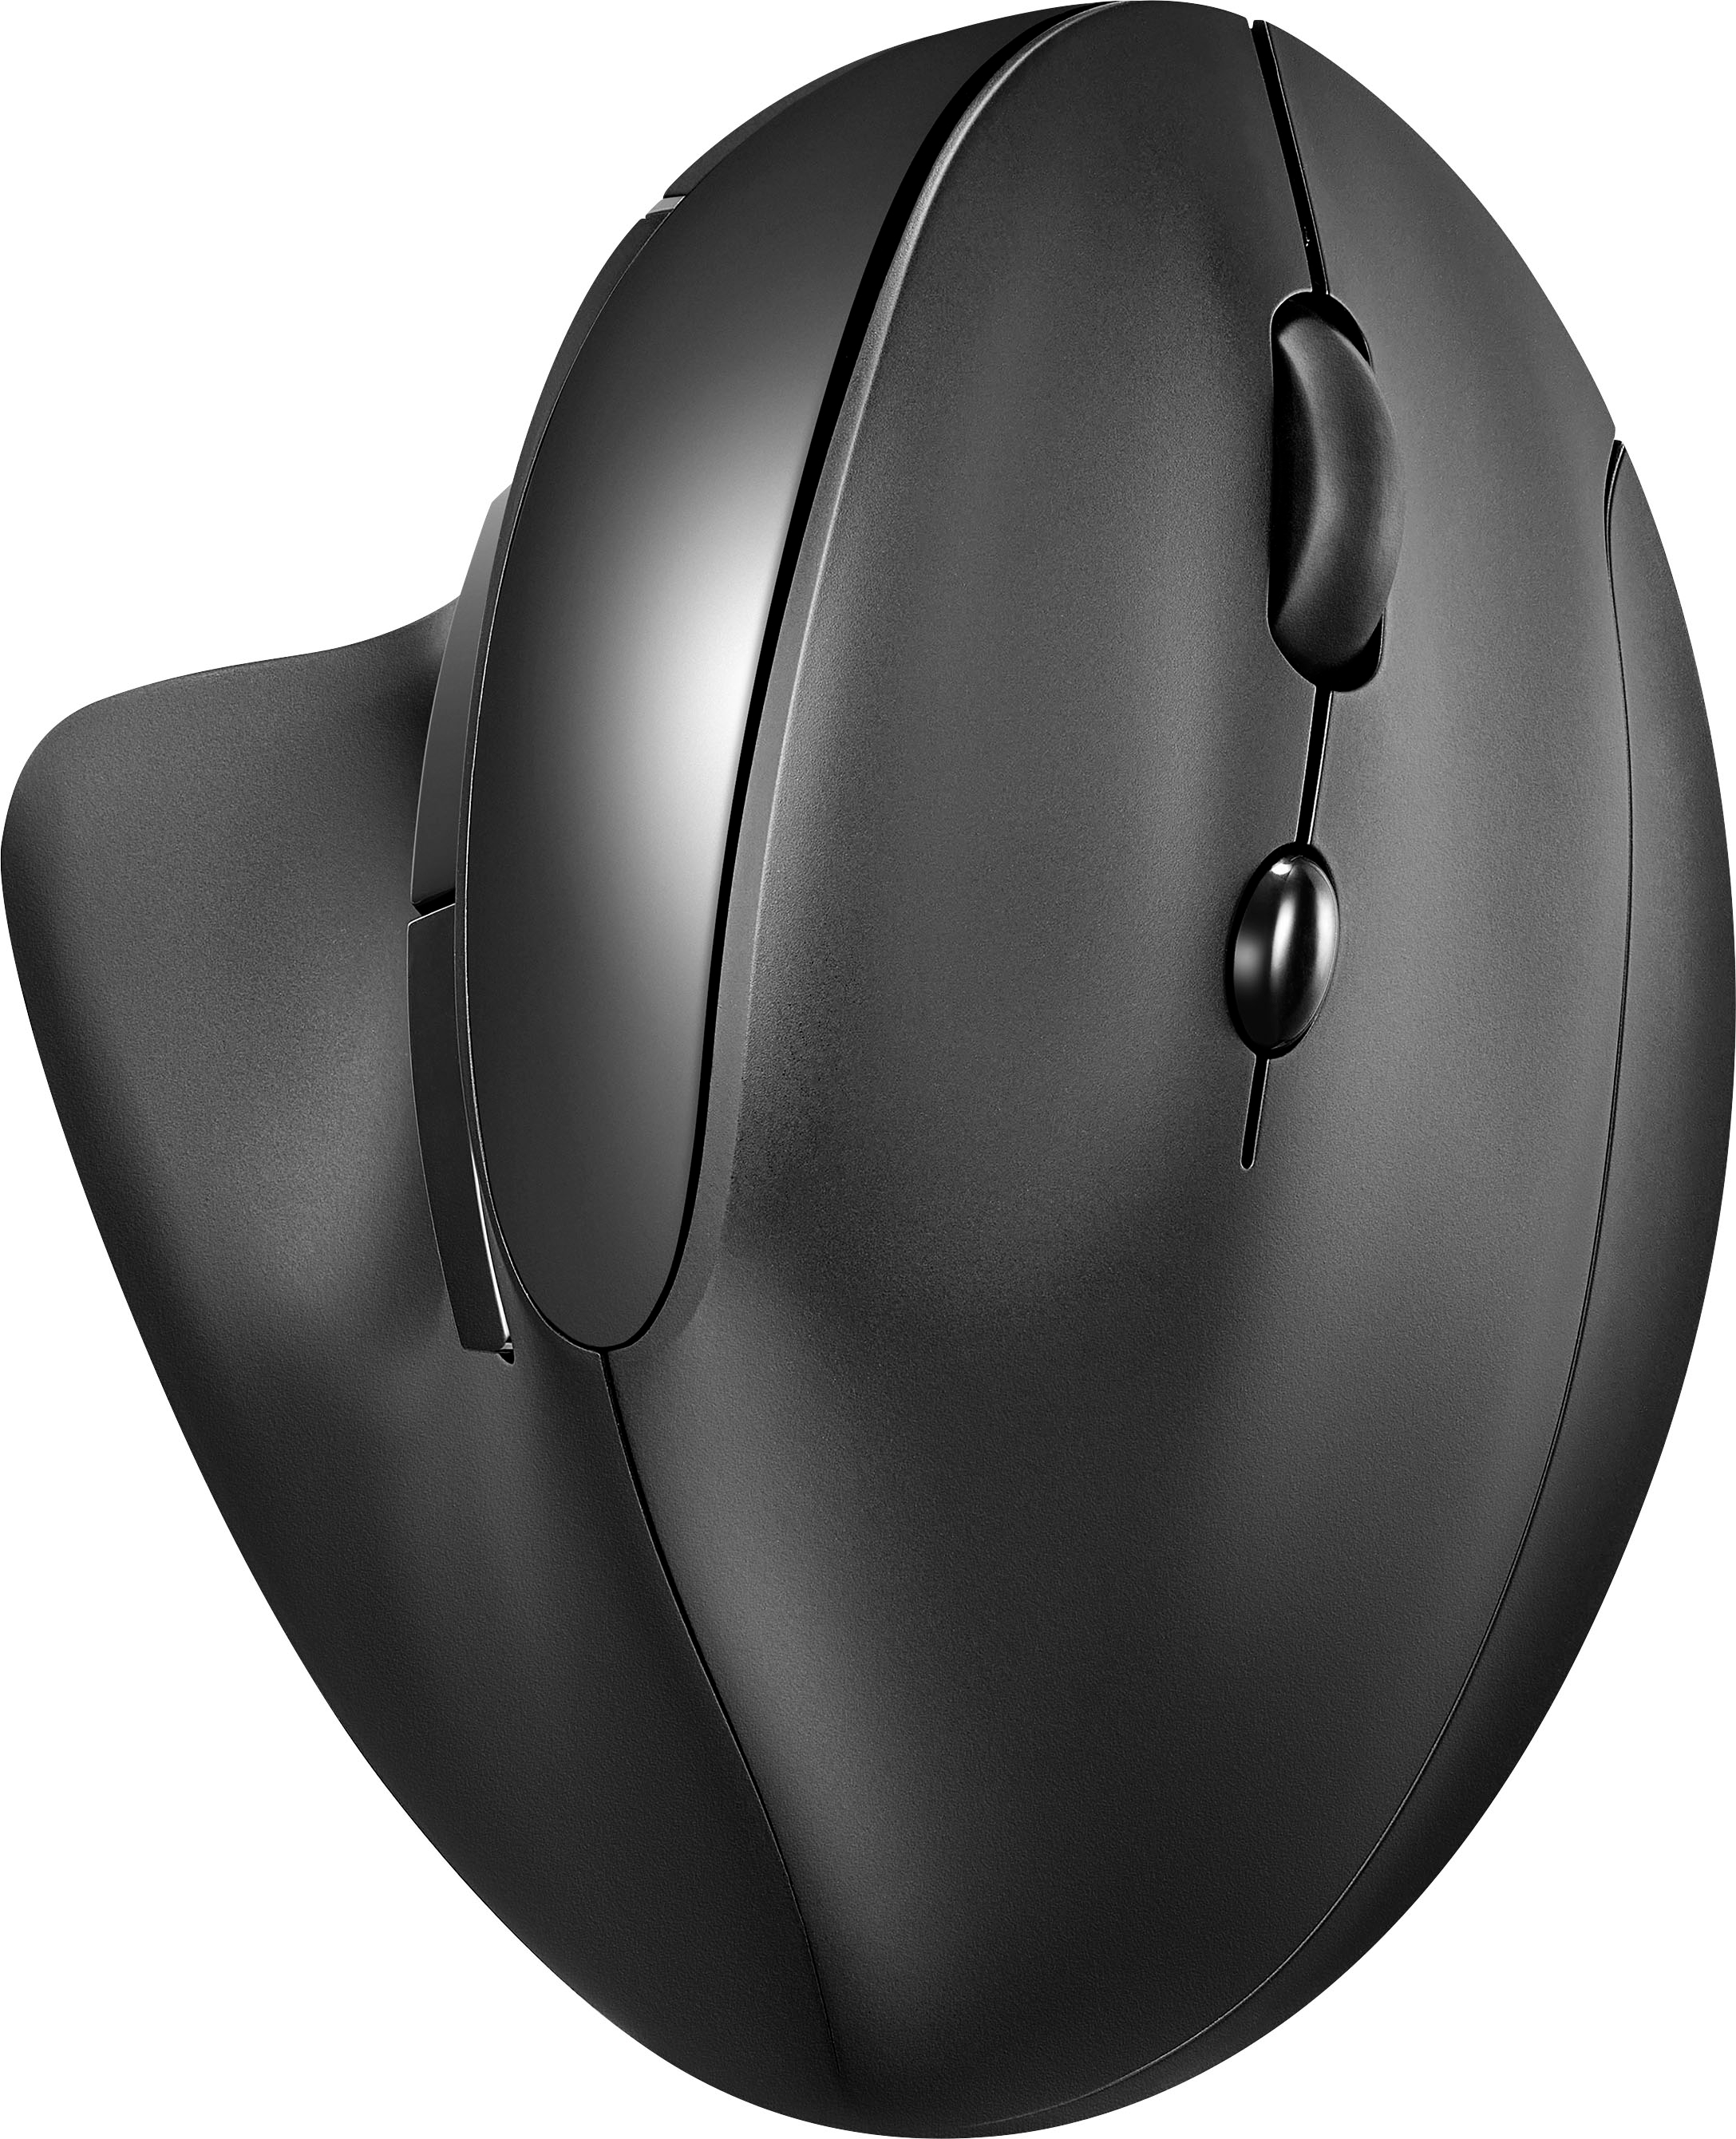 Logitech M705 MARATHON Wireless Mouse 8-BUTTON Version w/ Extra Thumb Button